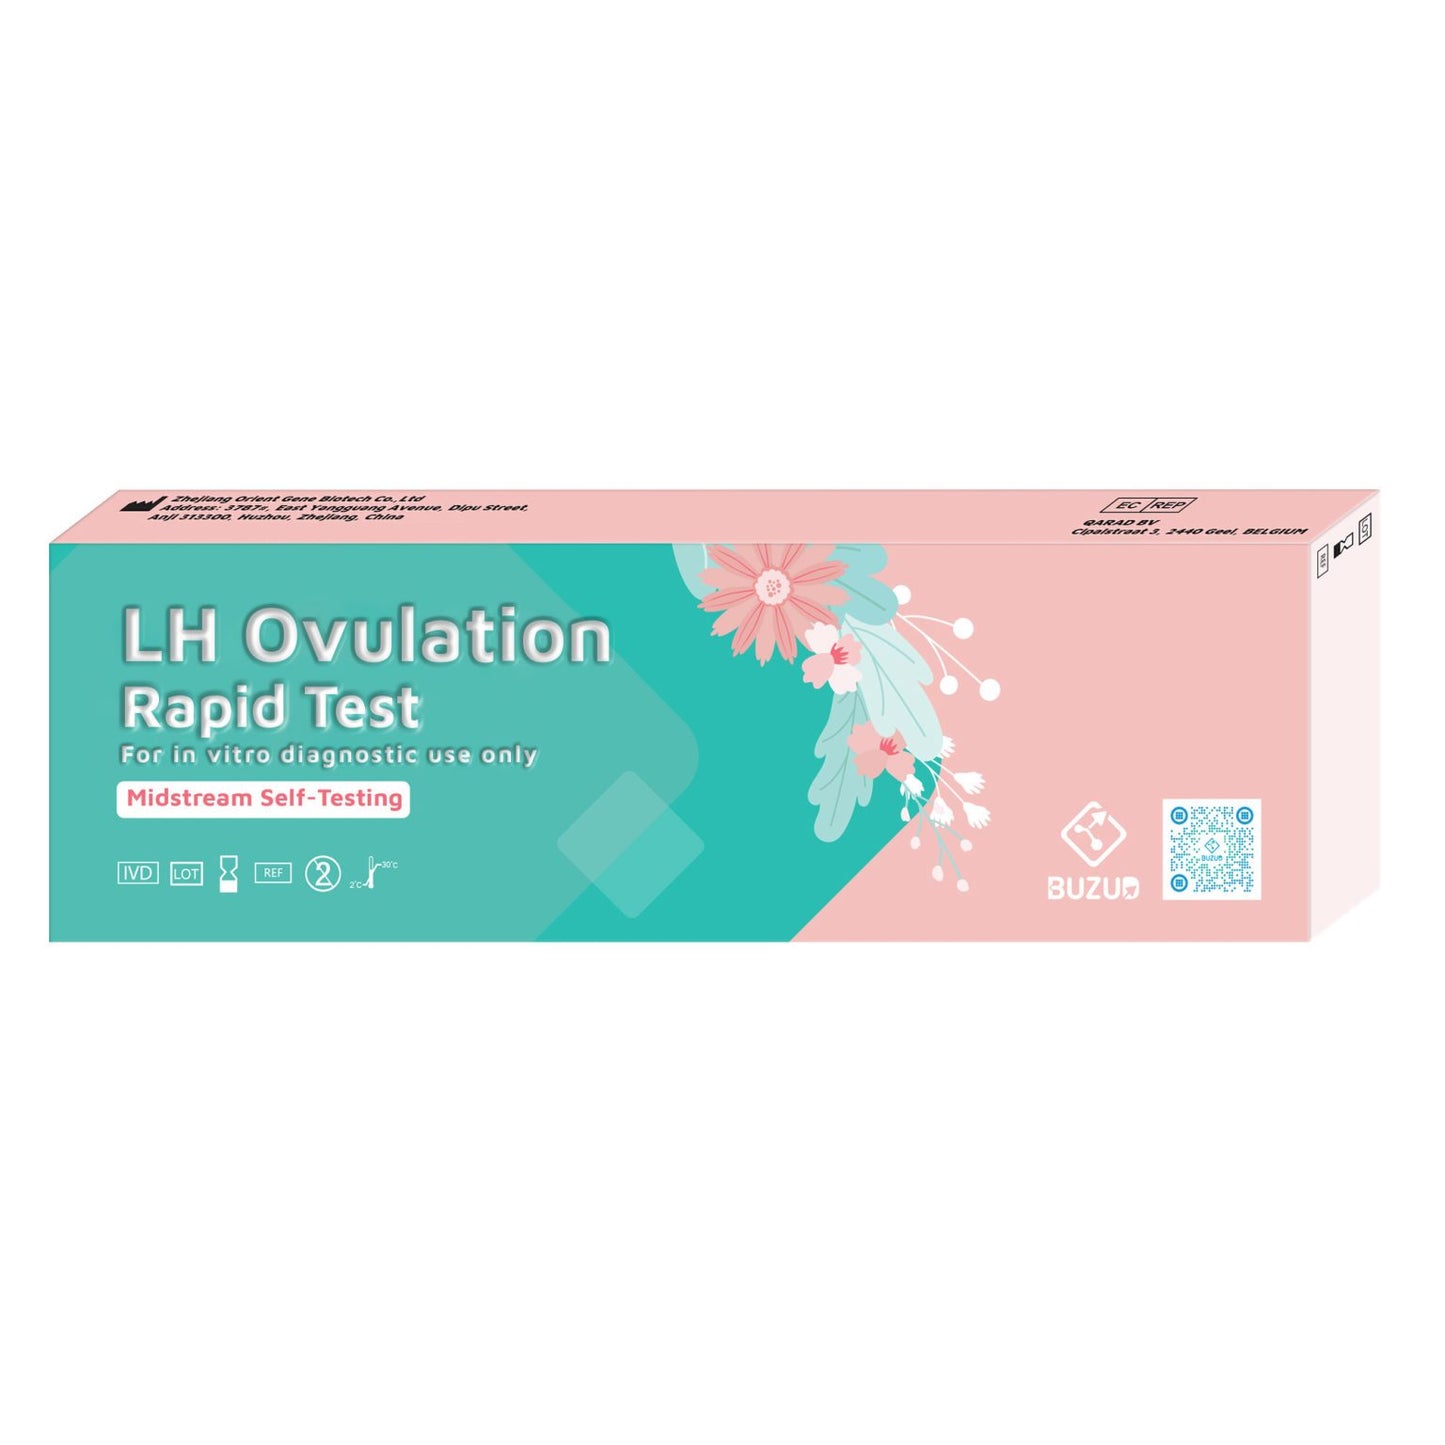 Her Ovulation Test Kit